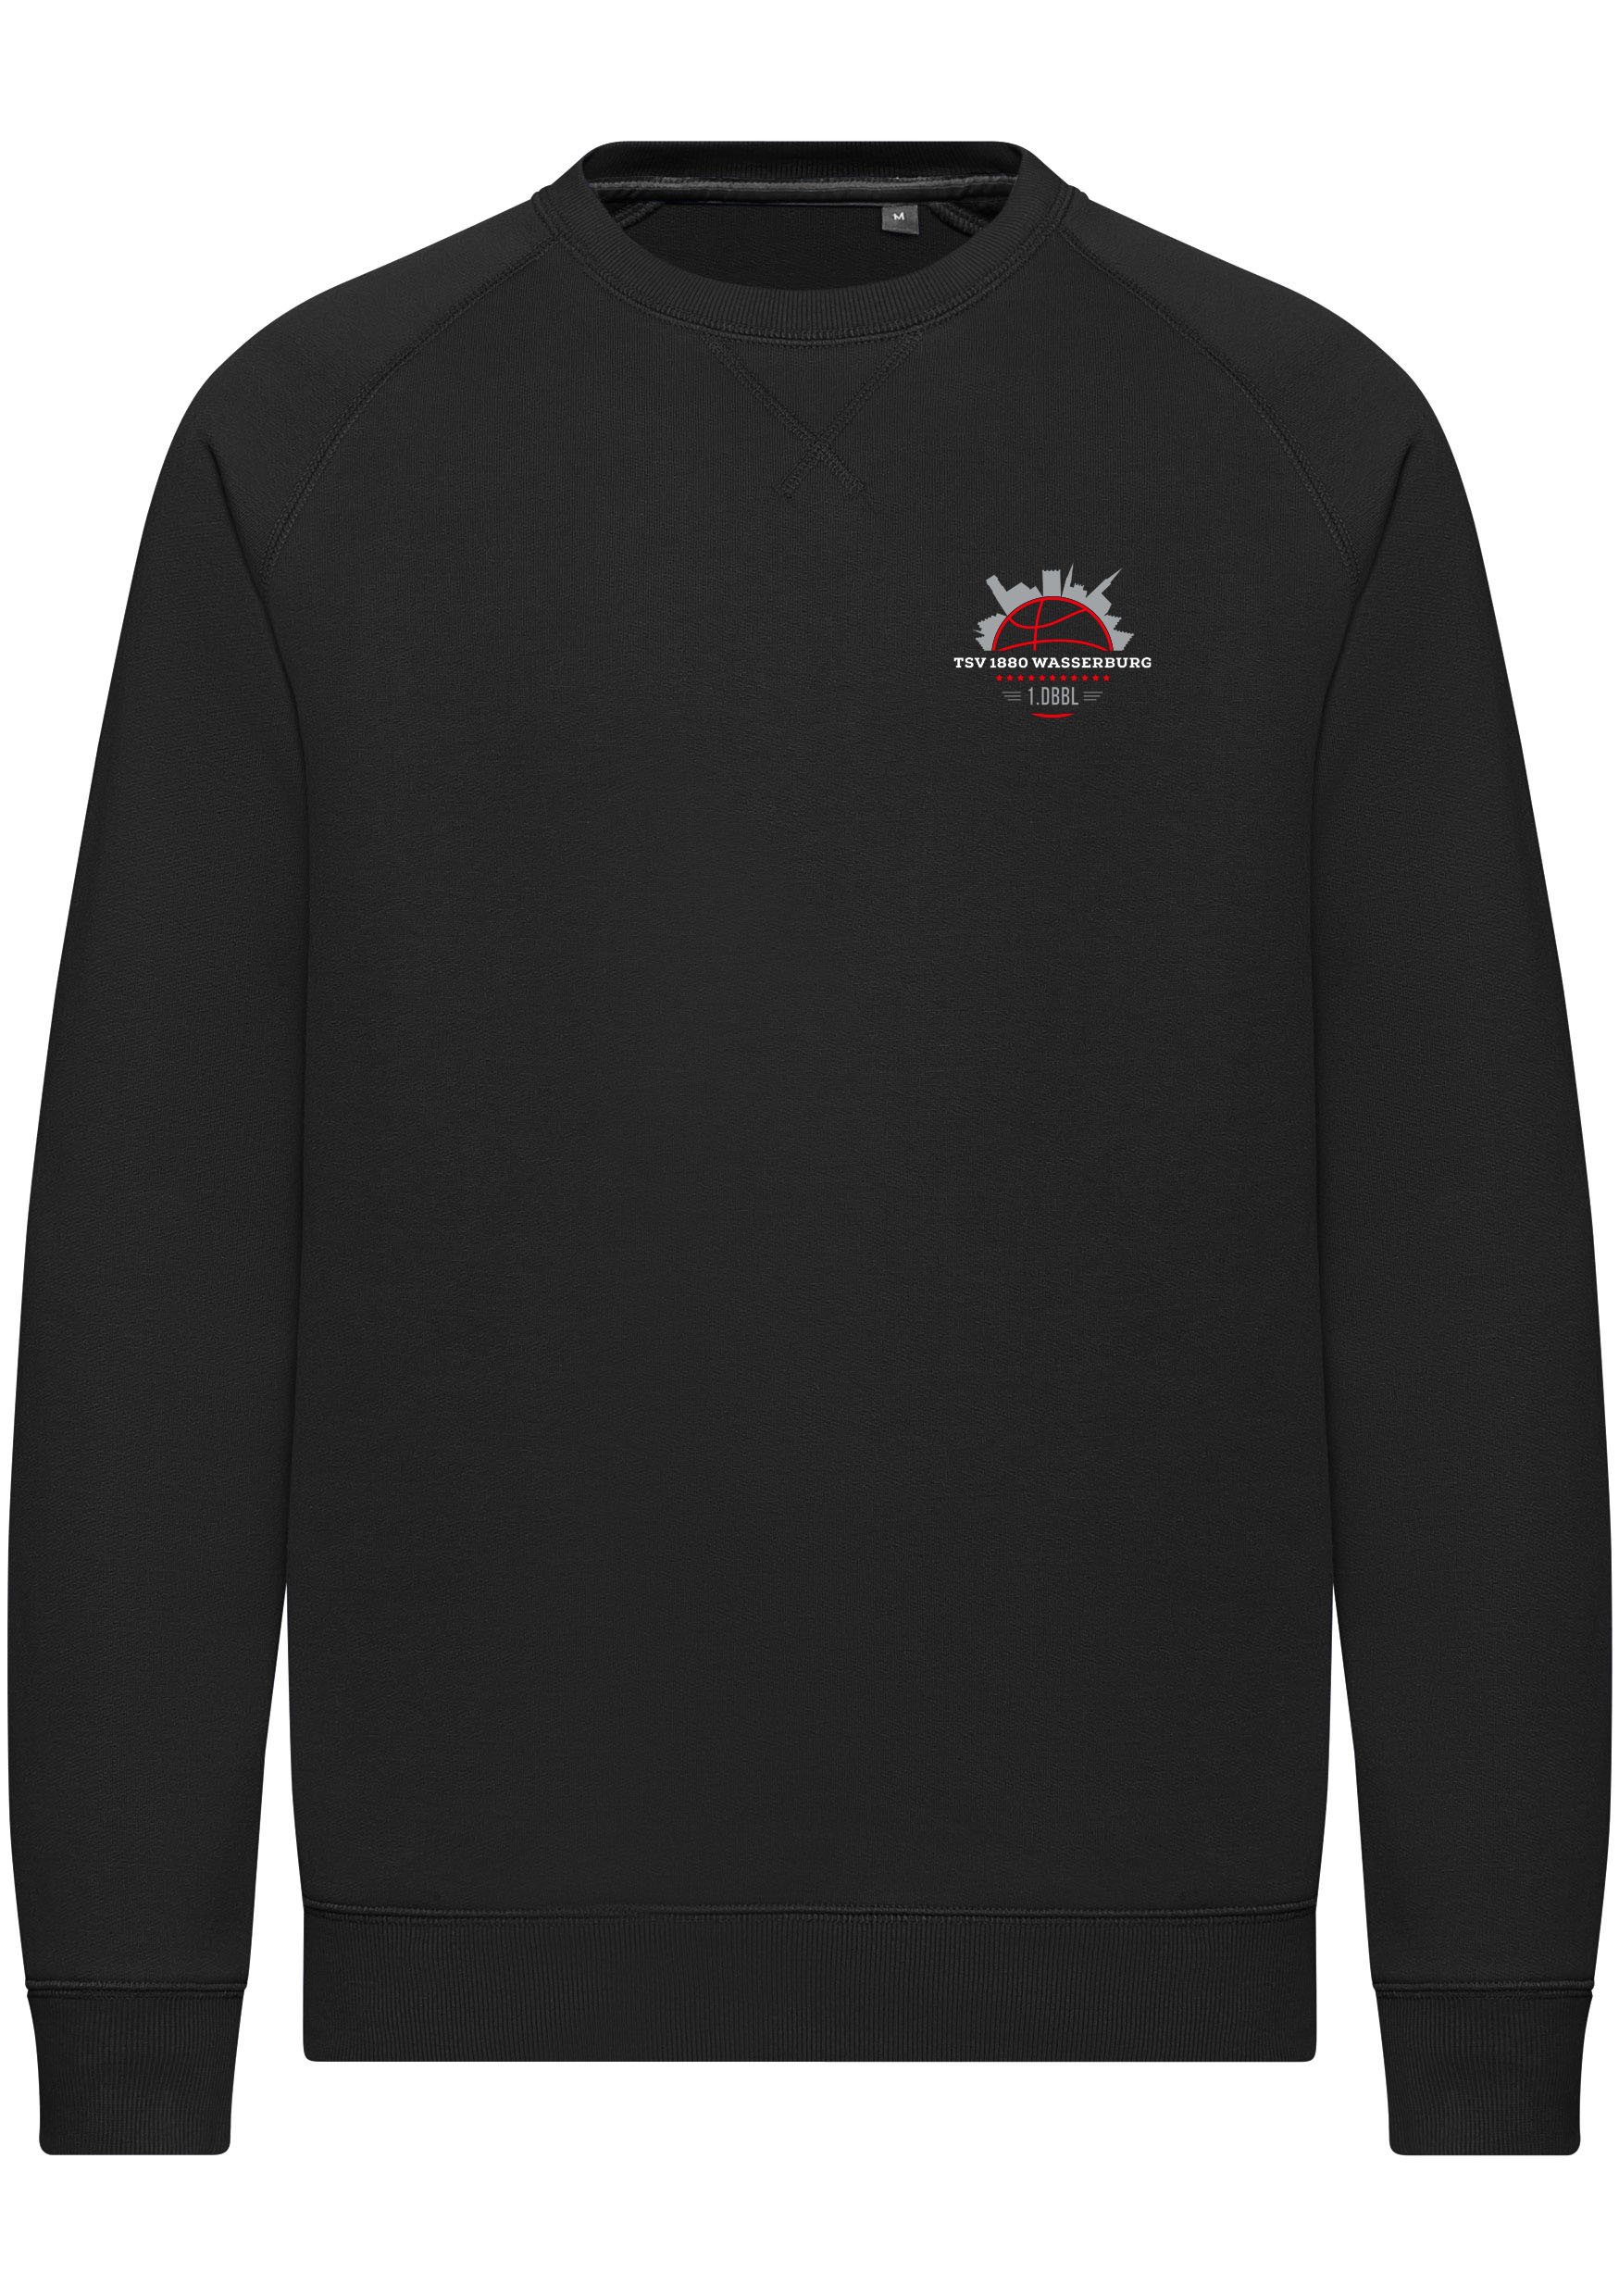 TSV 1880 Wasserburg Basic Sweatshirt